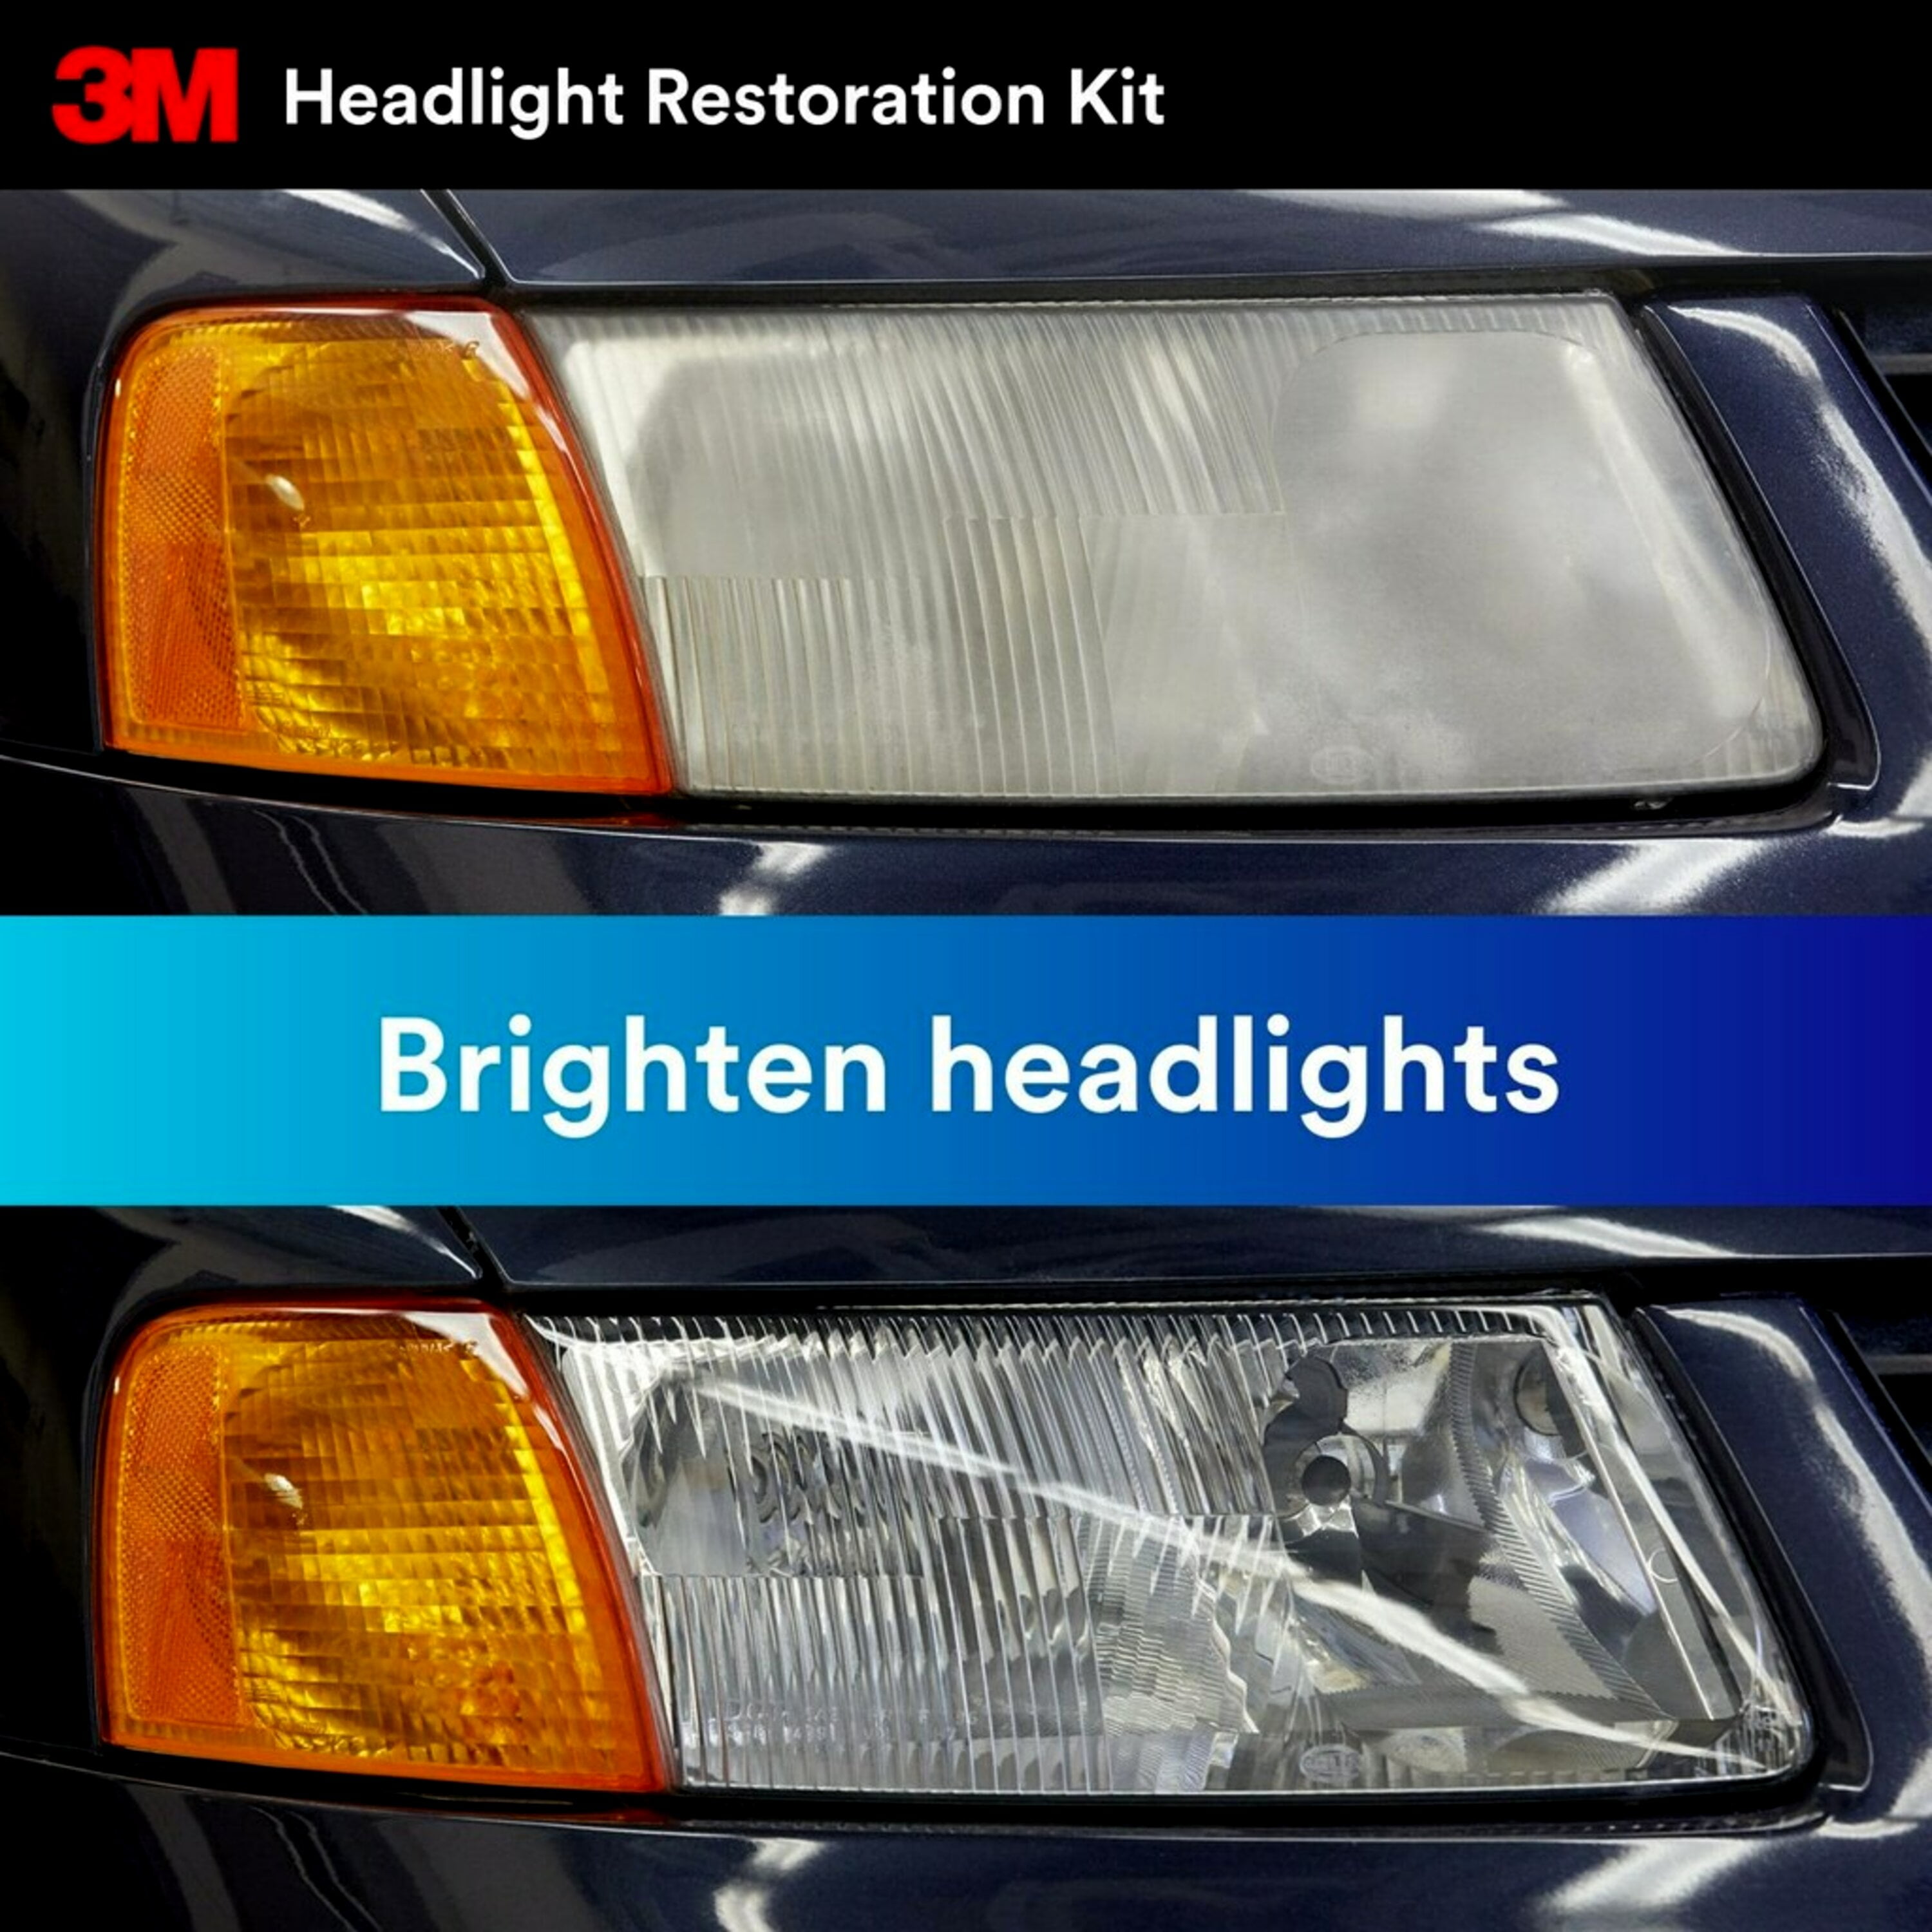 3M Headlight Lens Restoration Kit 02516 from 3M - Acme Tools